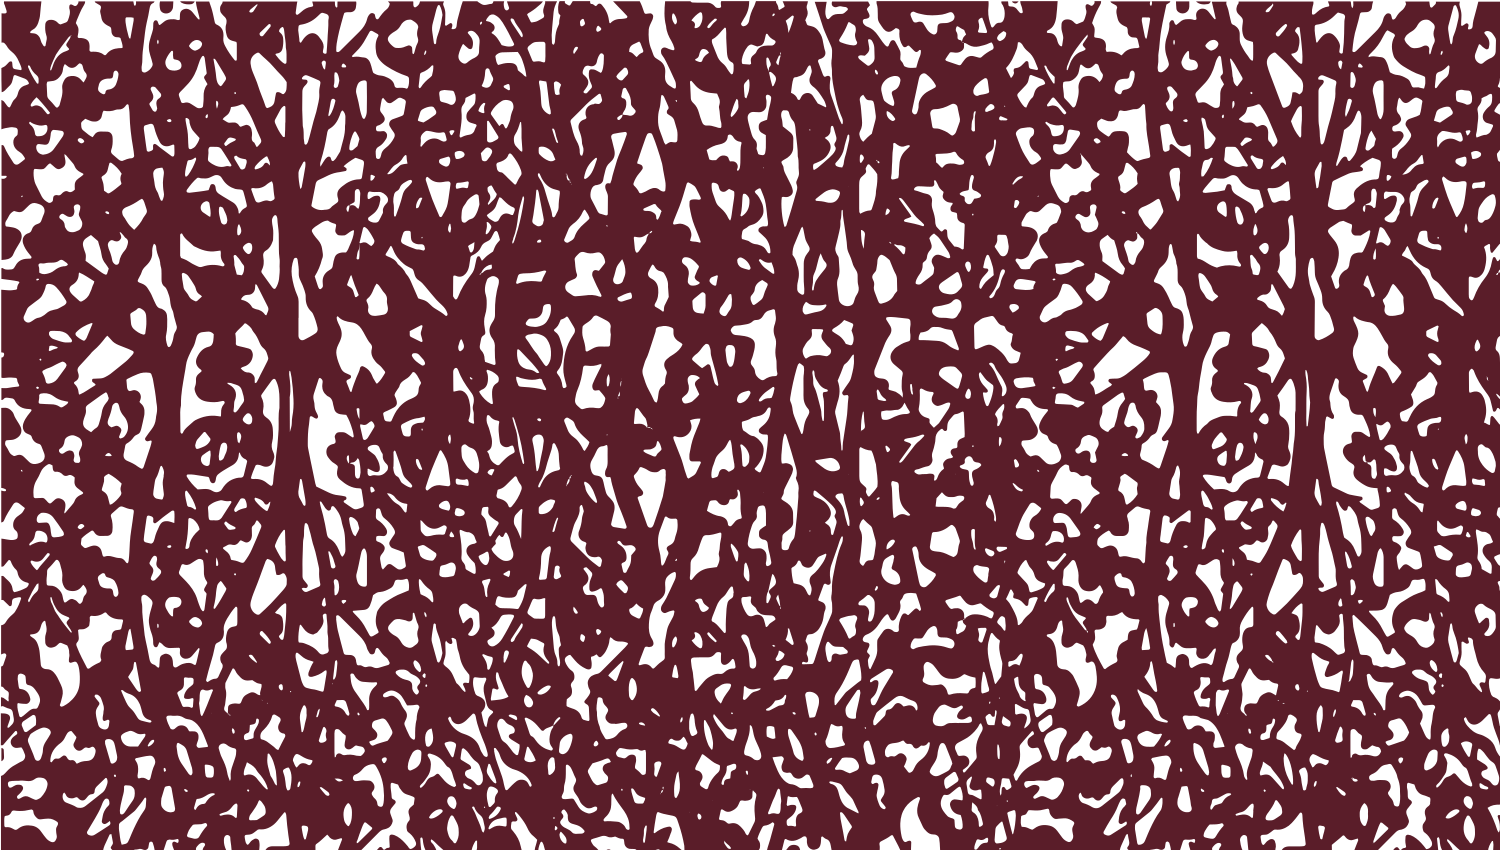 Parasoleil™ Regent's Park© pattern displayed with a burgundy color overlay